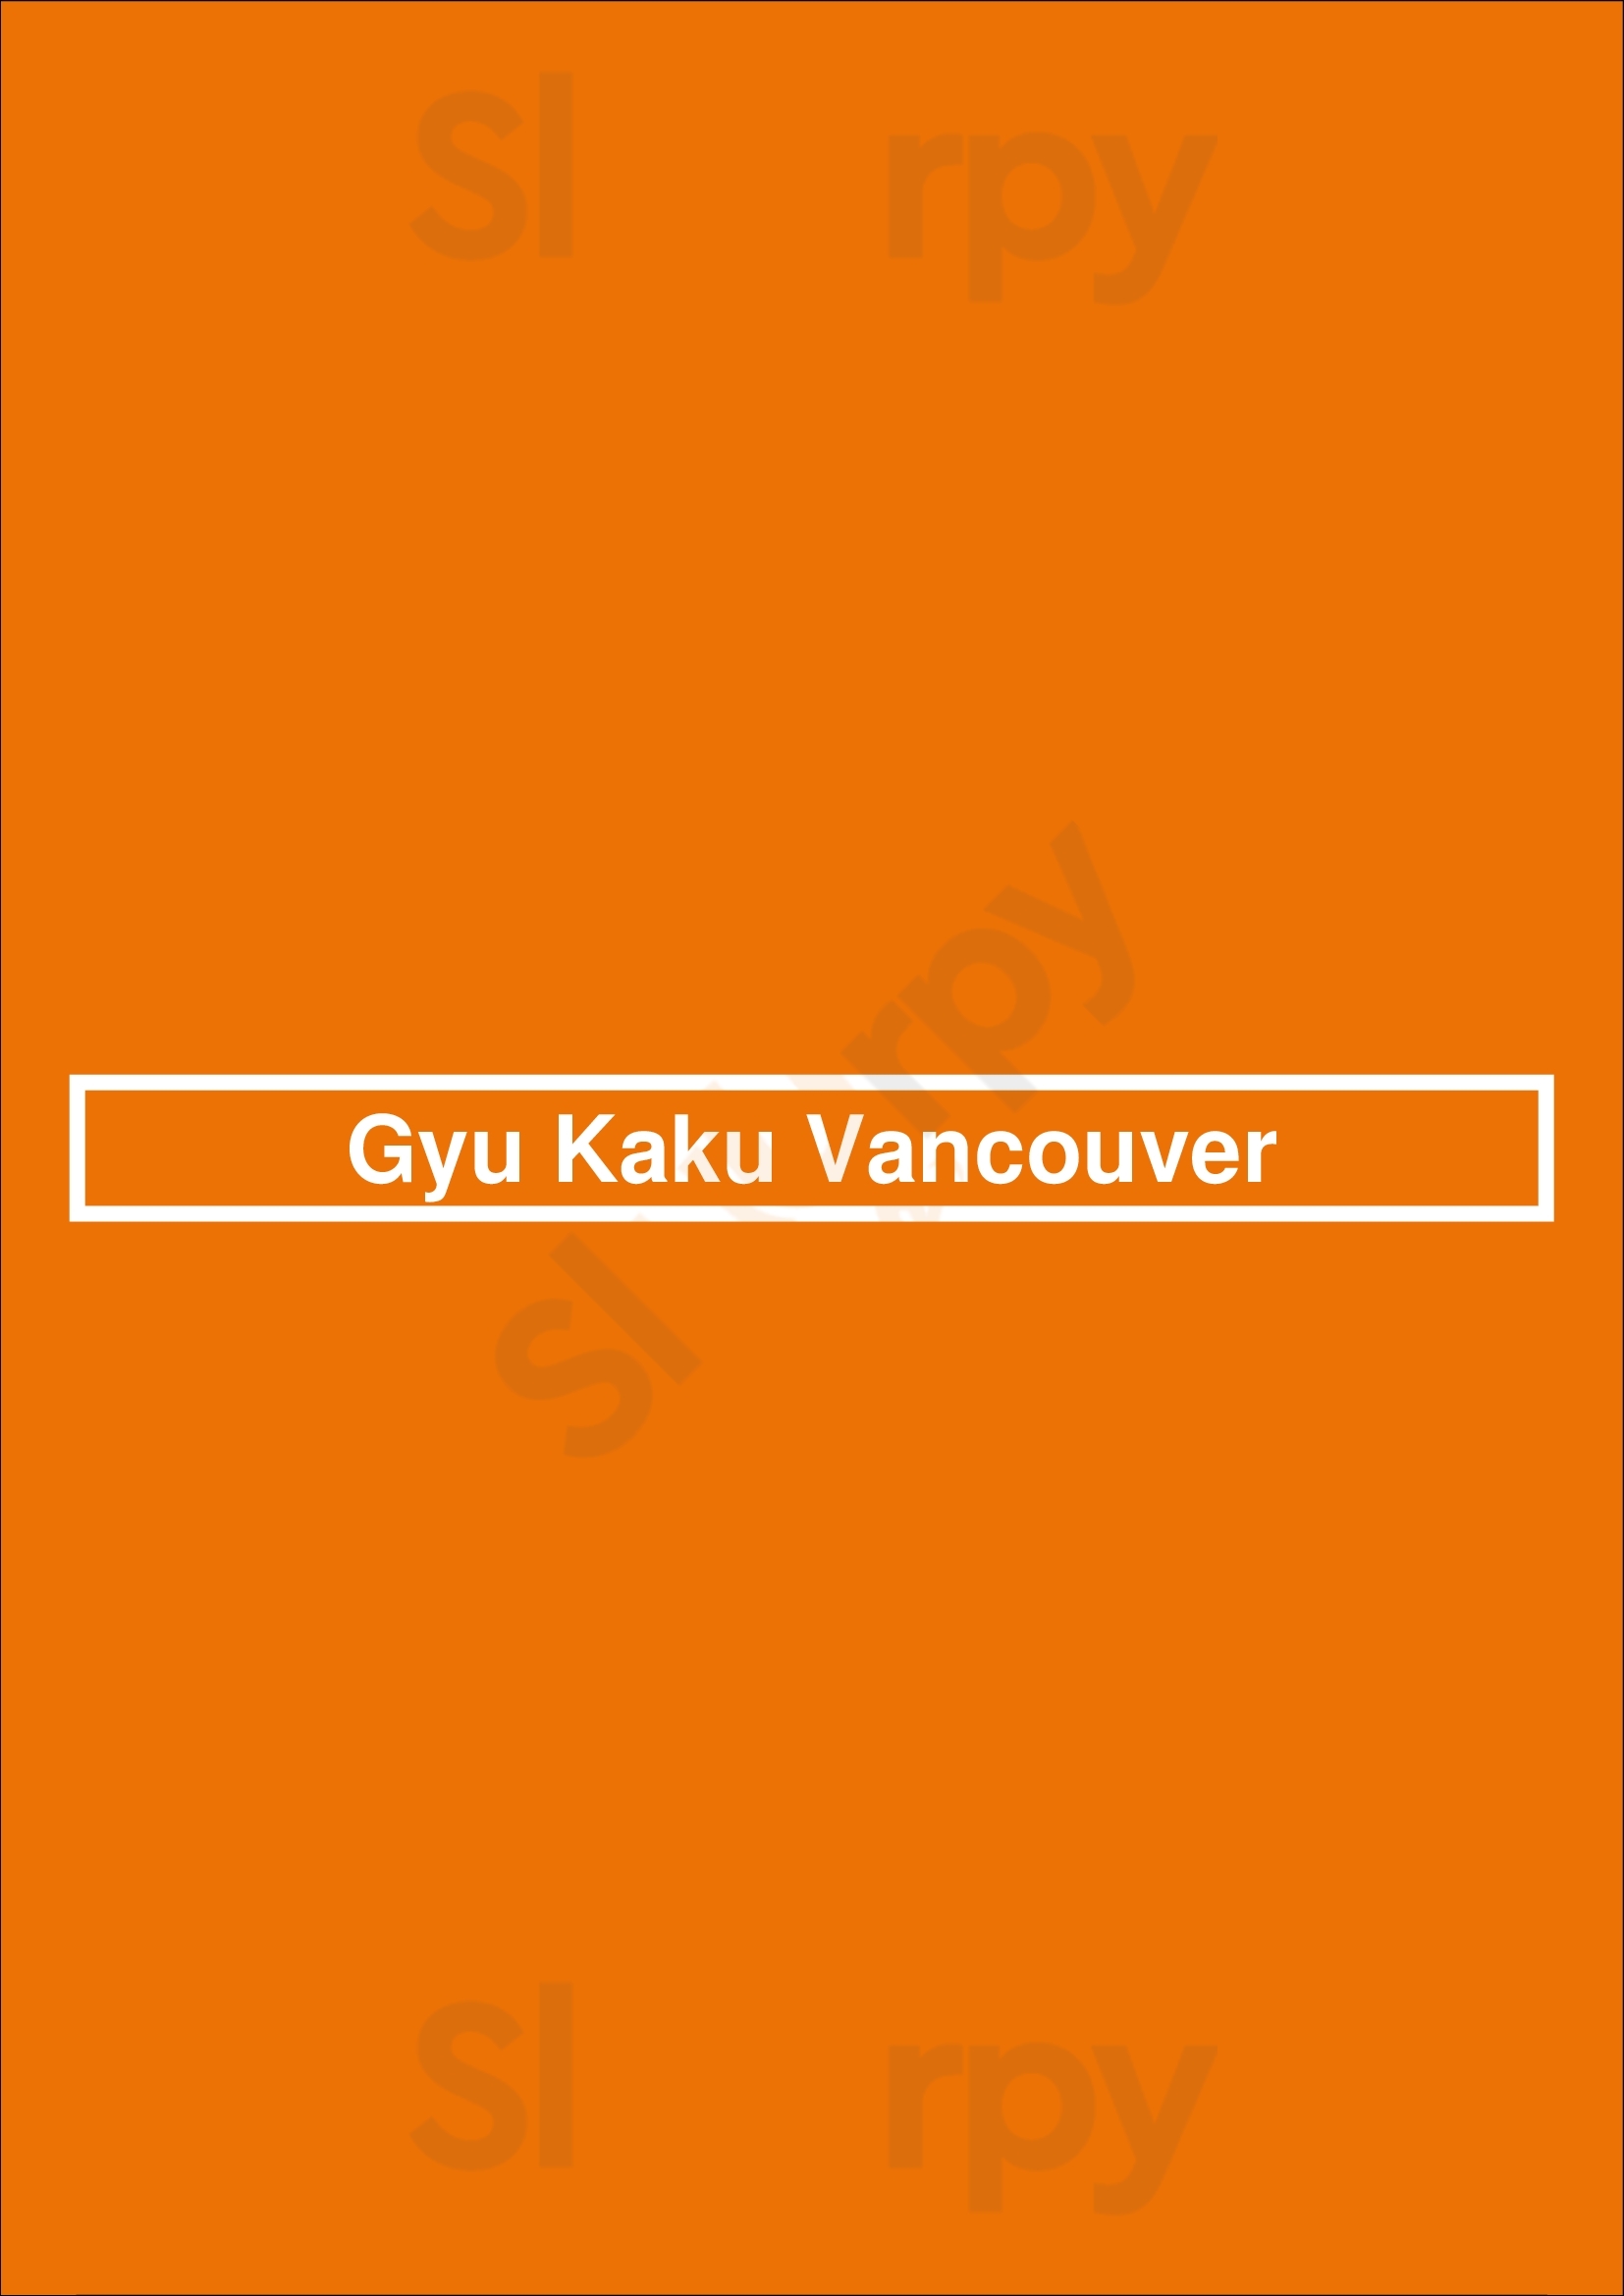 Gyu-kaku Japanese Bbq Vancouver Menu - 1